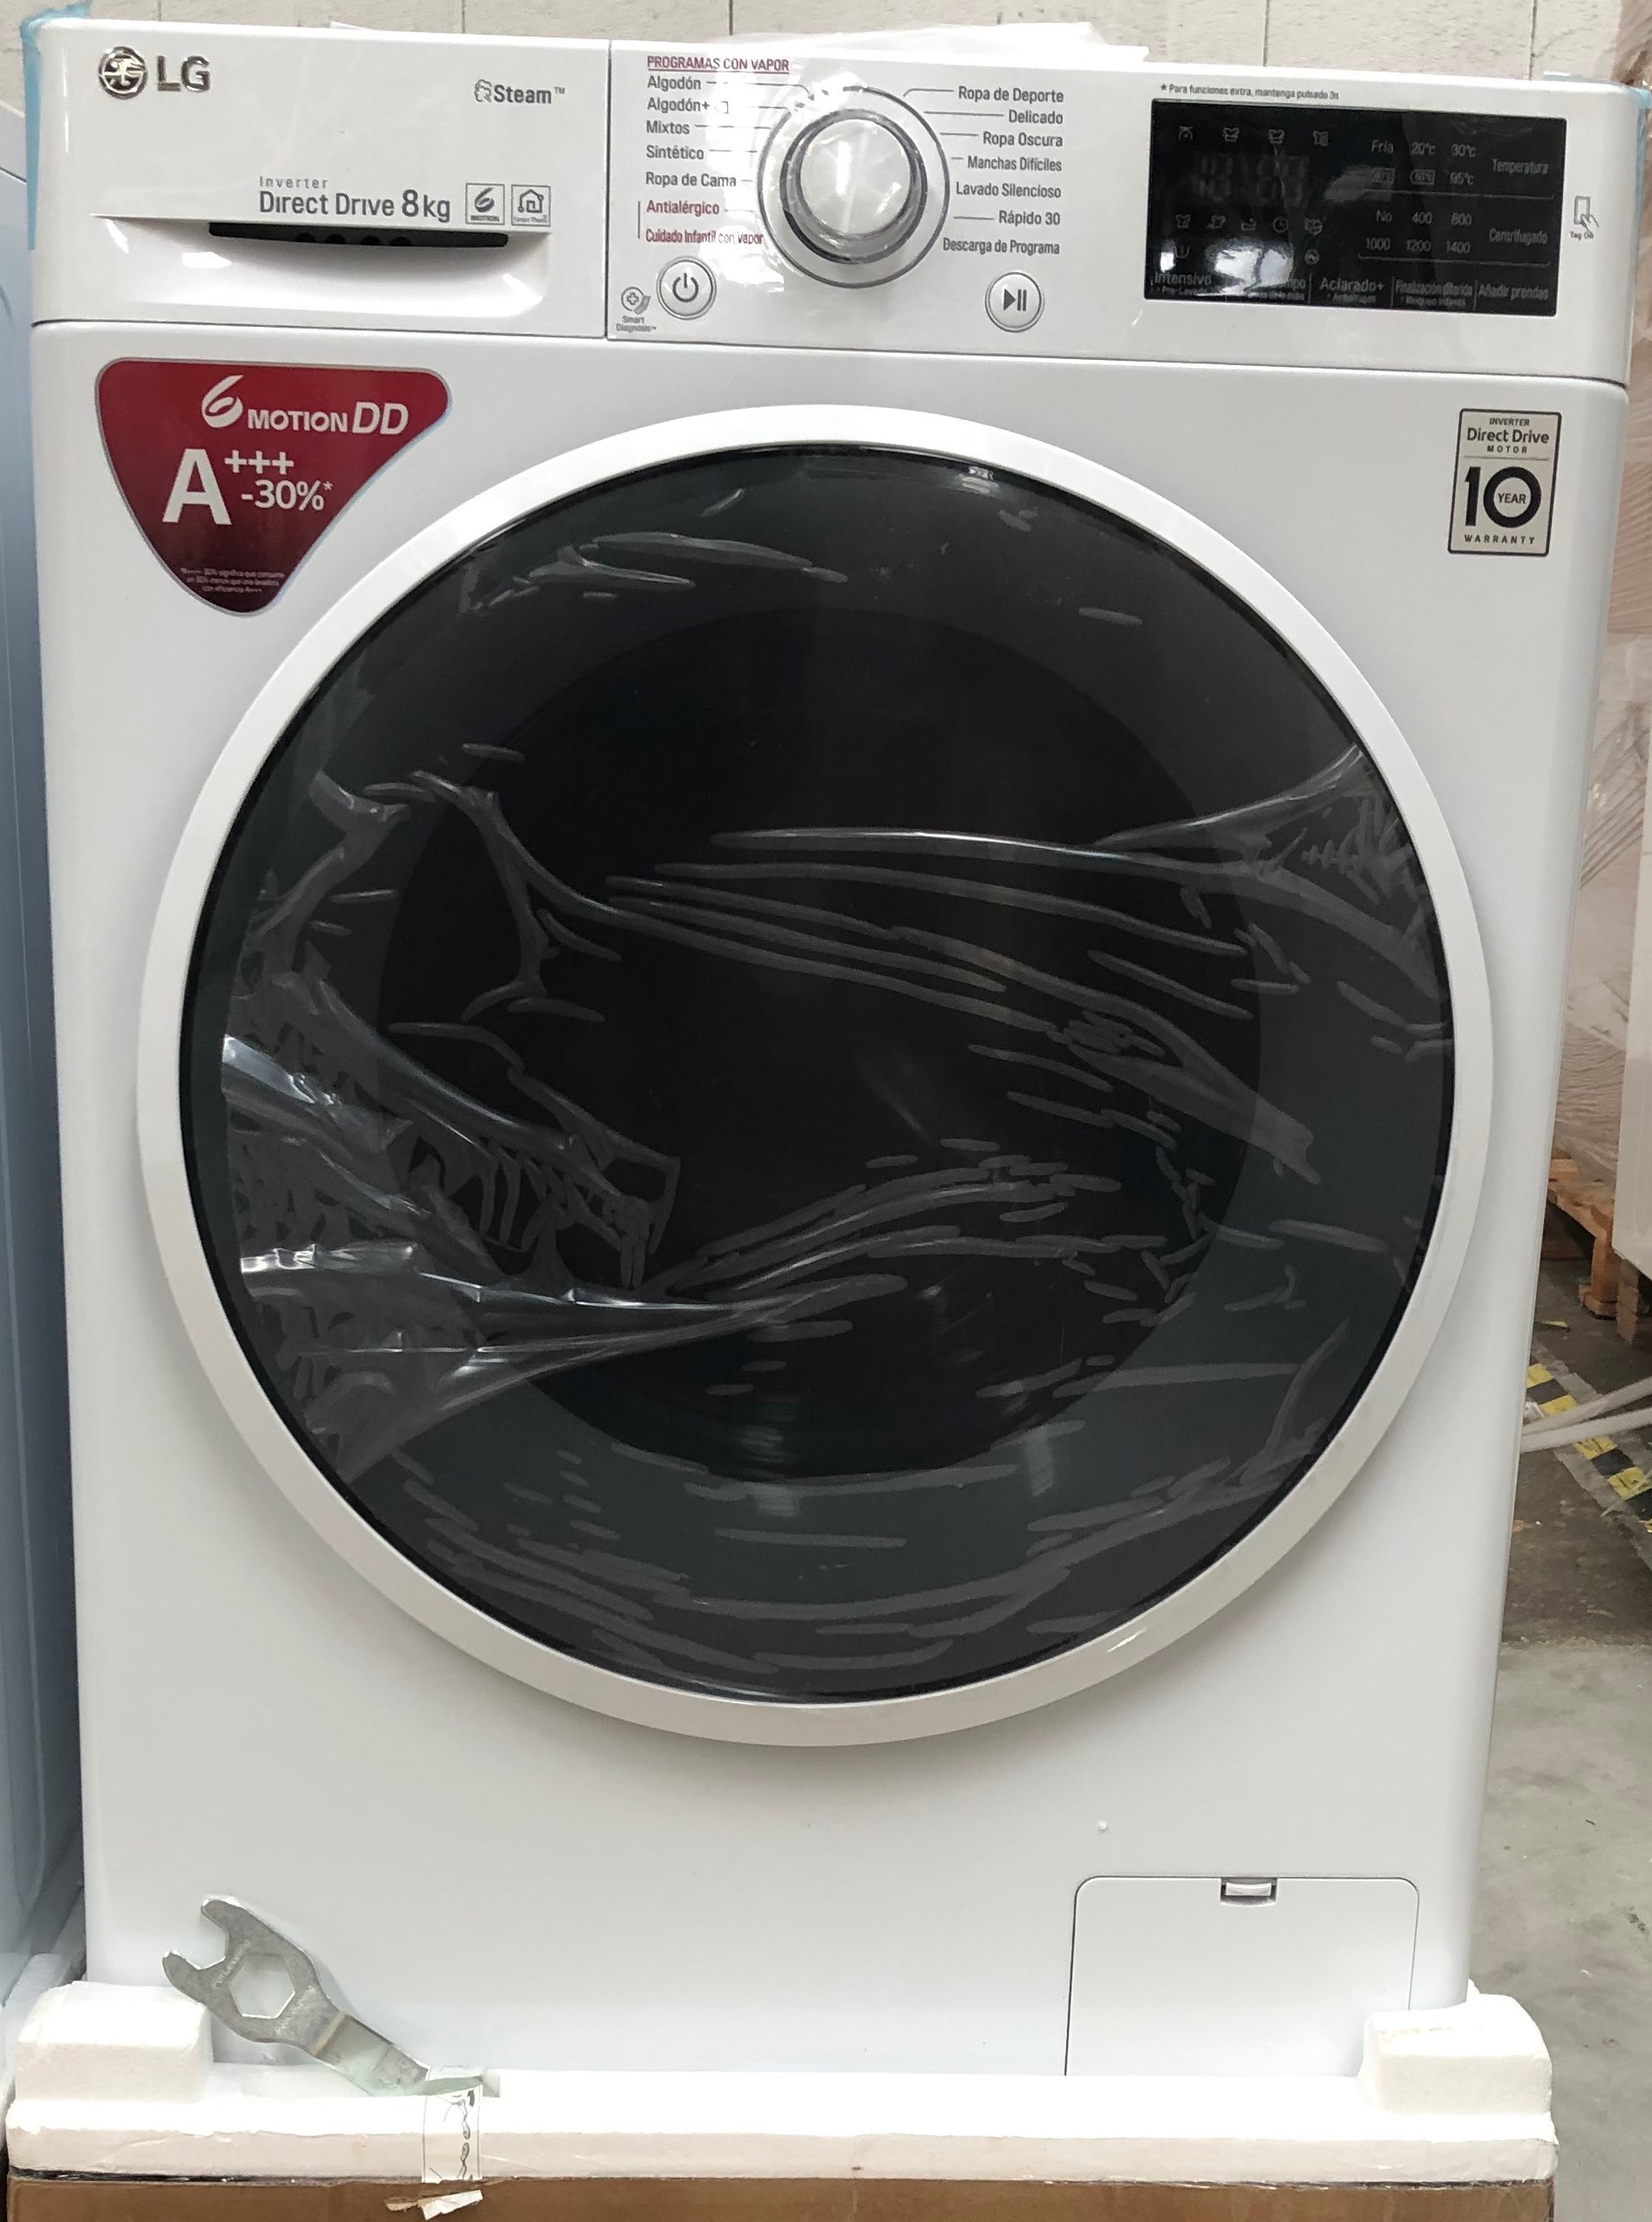 navegador irregular Irregularidades LG F4J6TY0W lavadora Independiente Carga frontal Blanco 8 kg 1400 RPM  A+++-30%